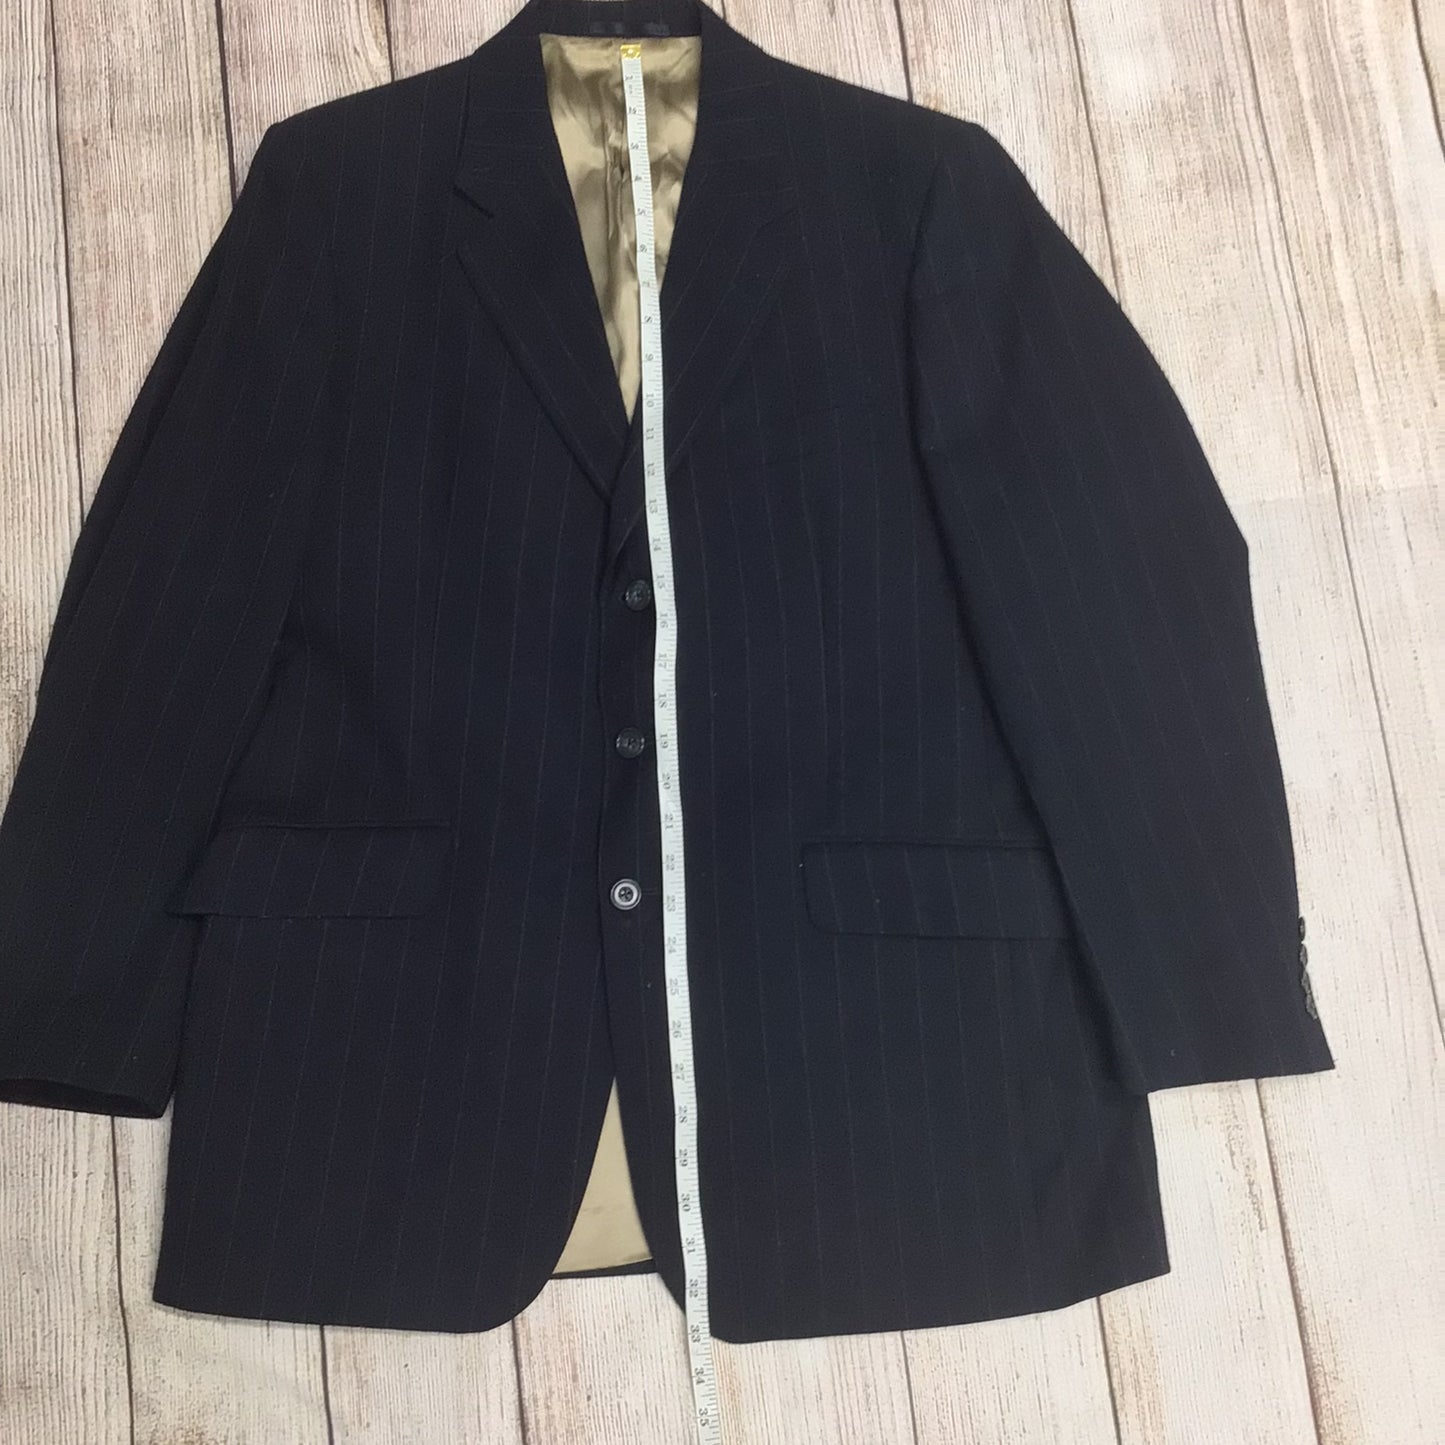 Aquascutum Navy Blue Striped Blazer Jacket 100% Wool Size 41R